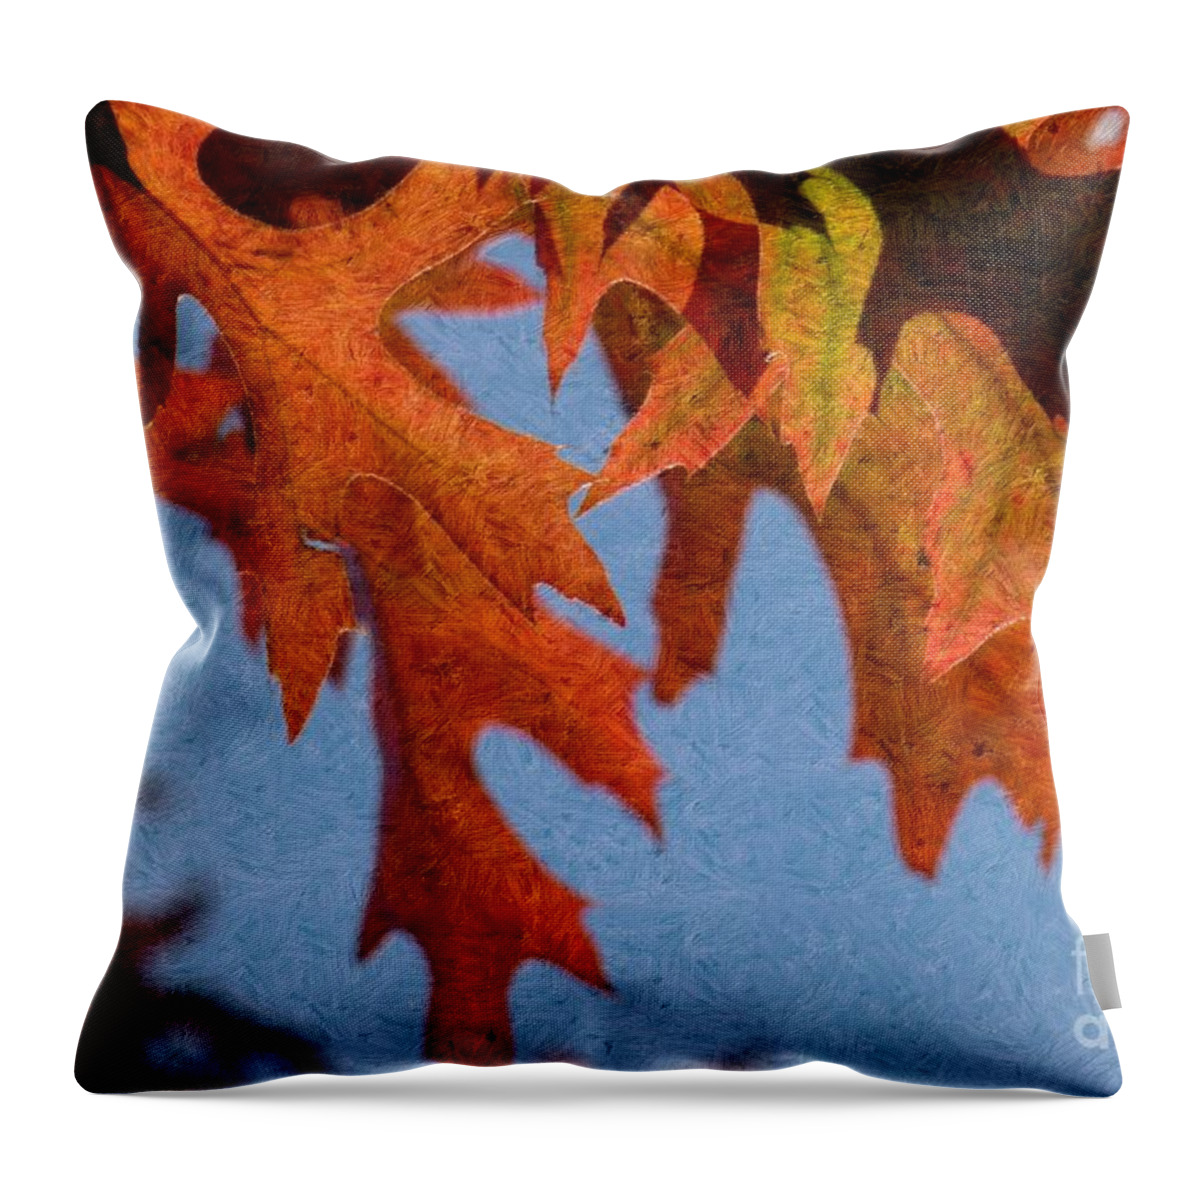 Autumn Throw Pillow featuring the photograph Autumn Leaves 6 by Jean Bernard Roussilhe